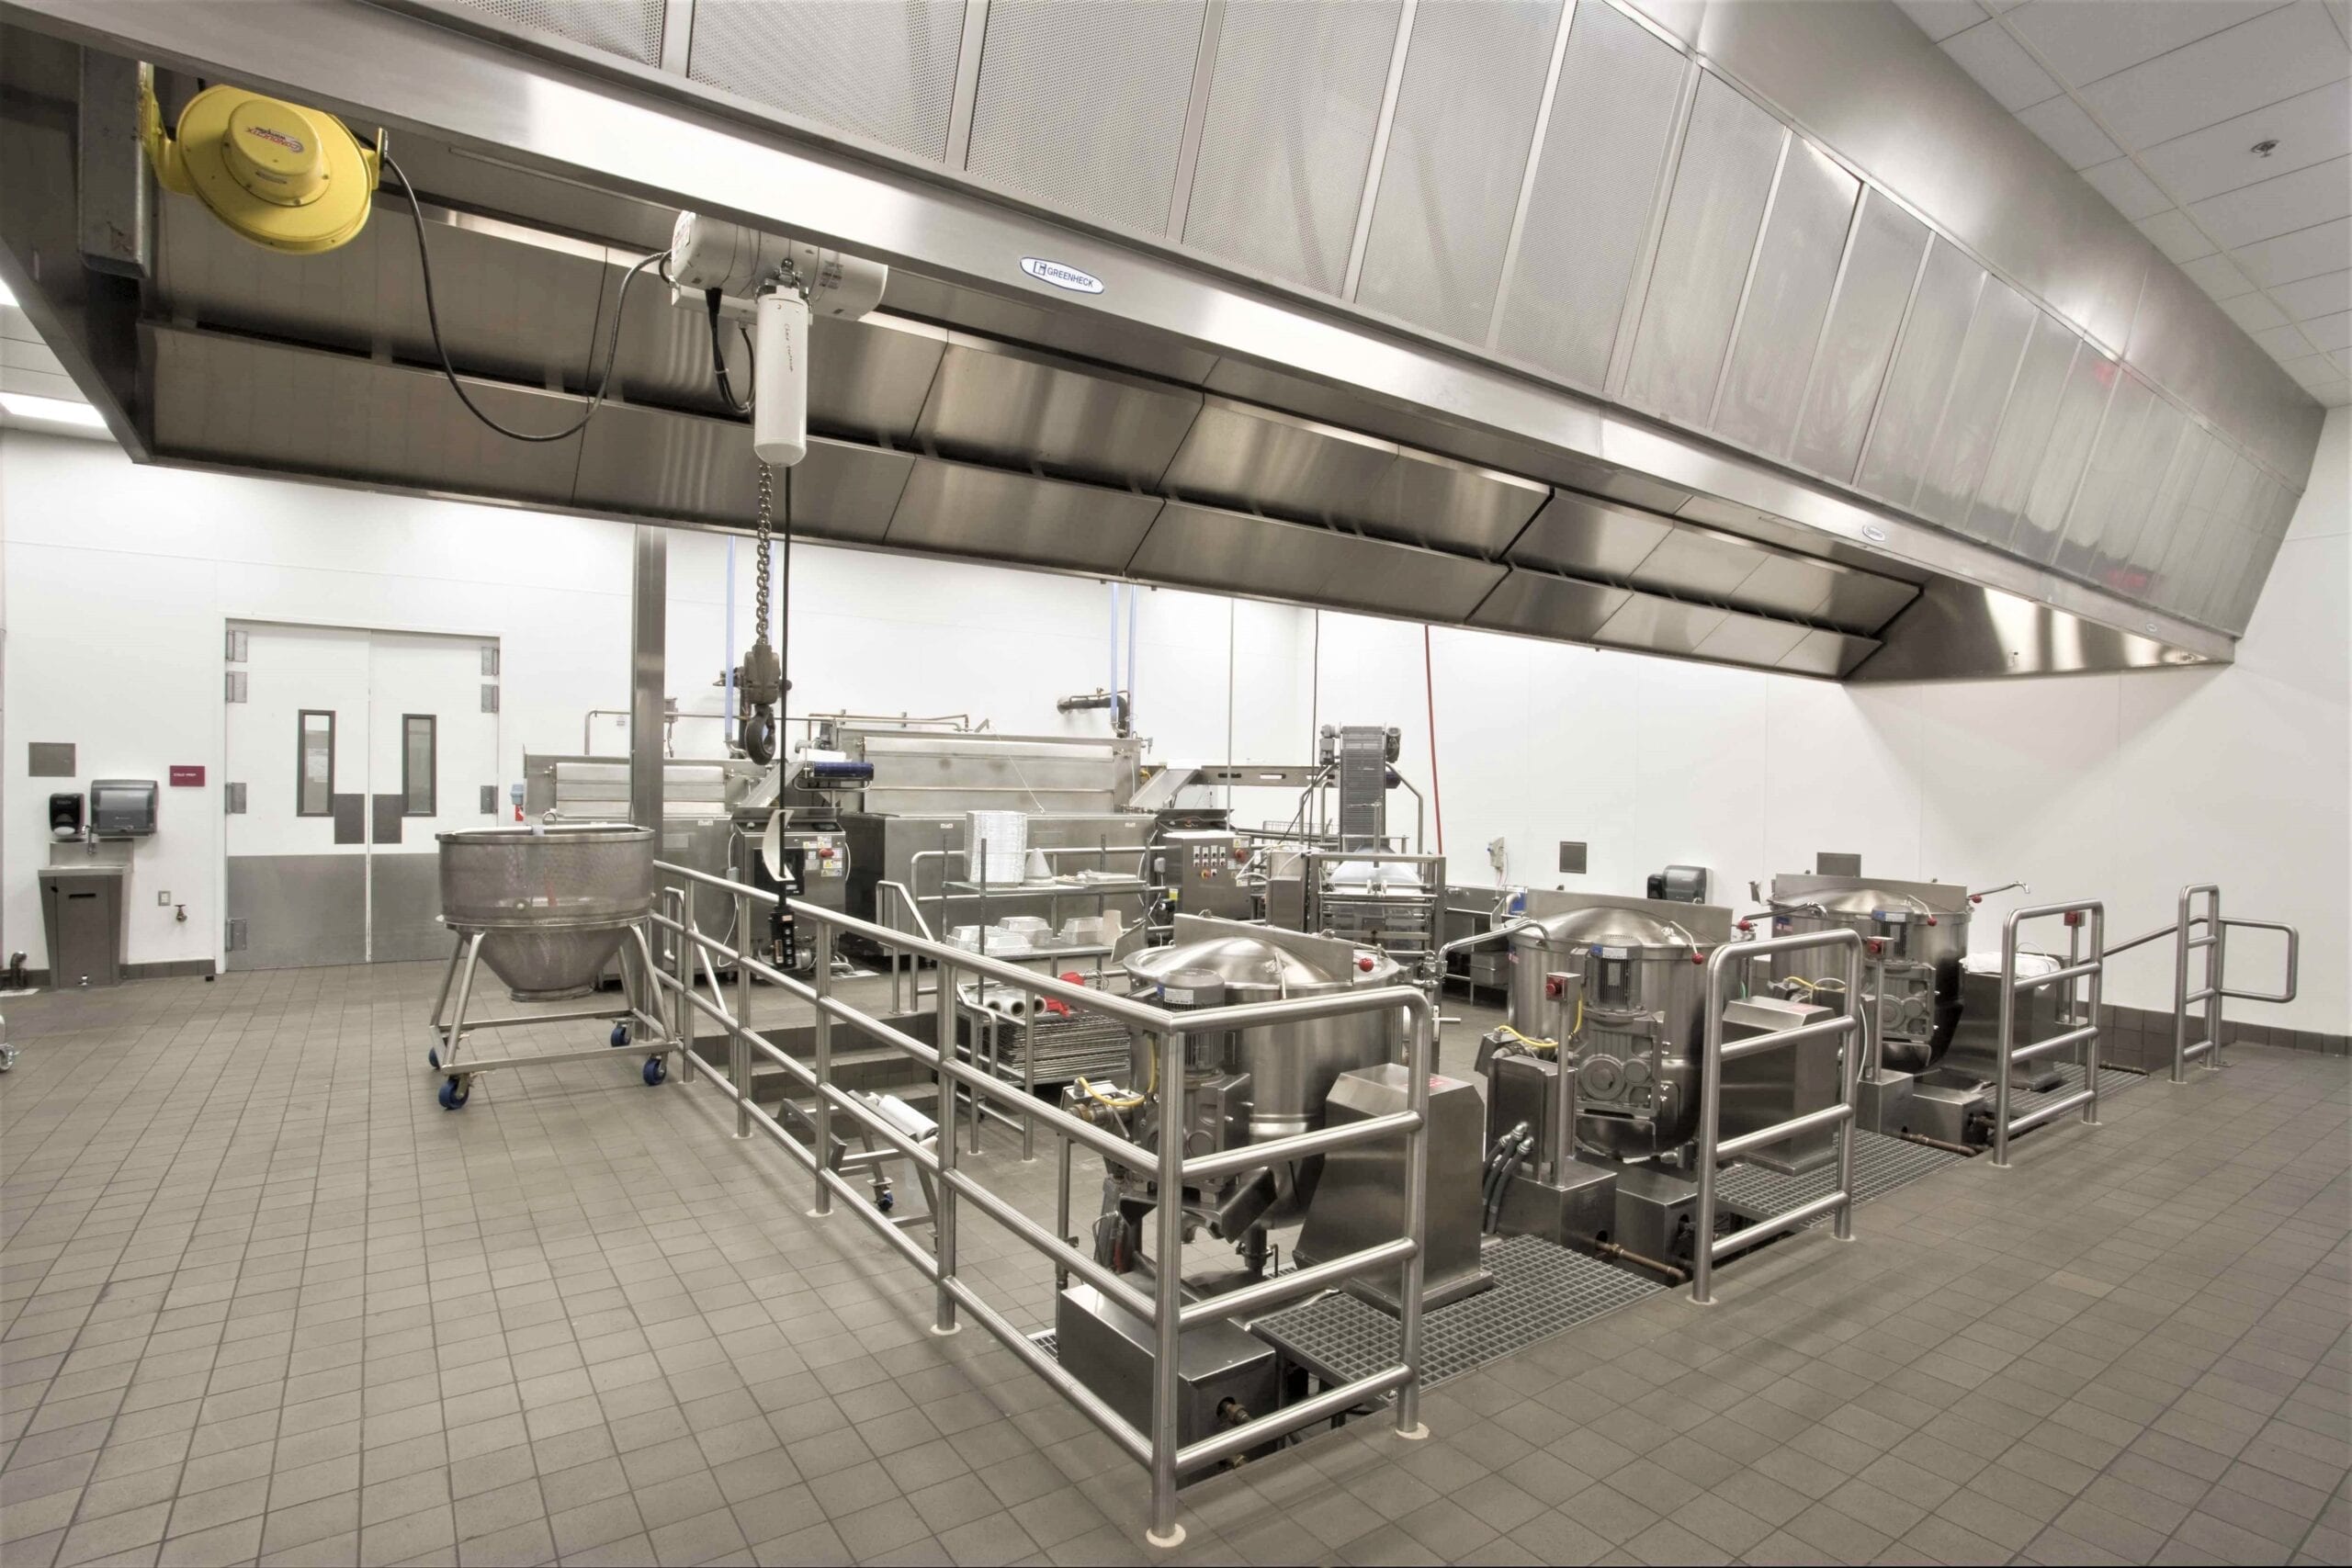 Metropolitan State Hospital Central Kitchen machinery.